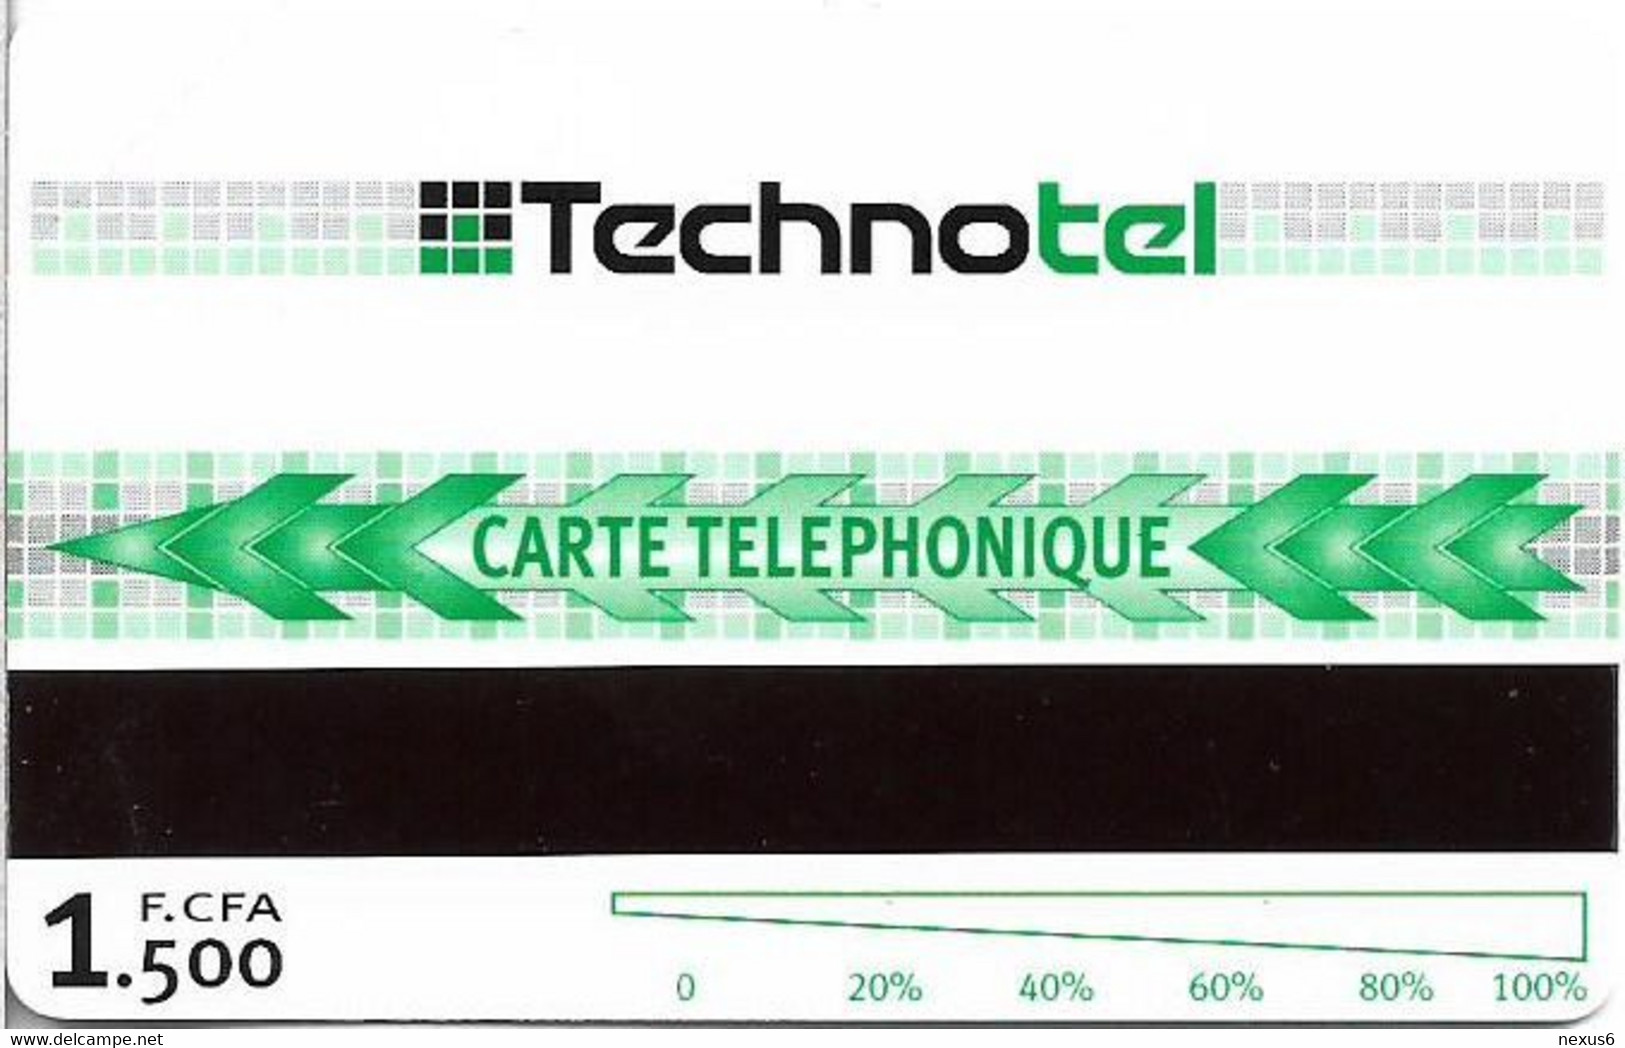 Congo Rep. (Brazzaville) - ONPT (Urmet) - Avec Technotel Communiquer C'est Plus Facile!, 2003, 1.500FCFA, Mint - Congo